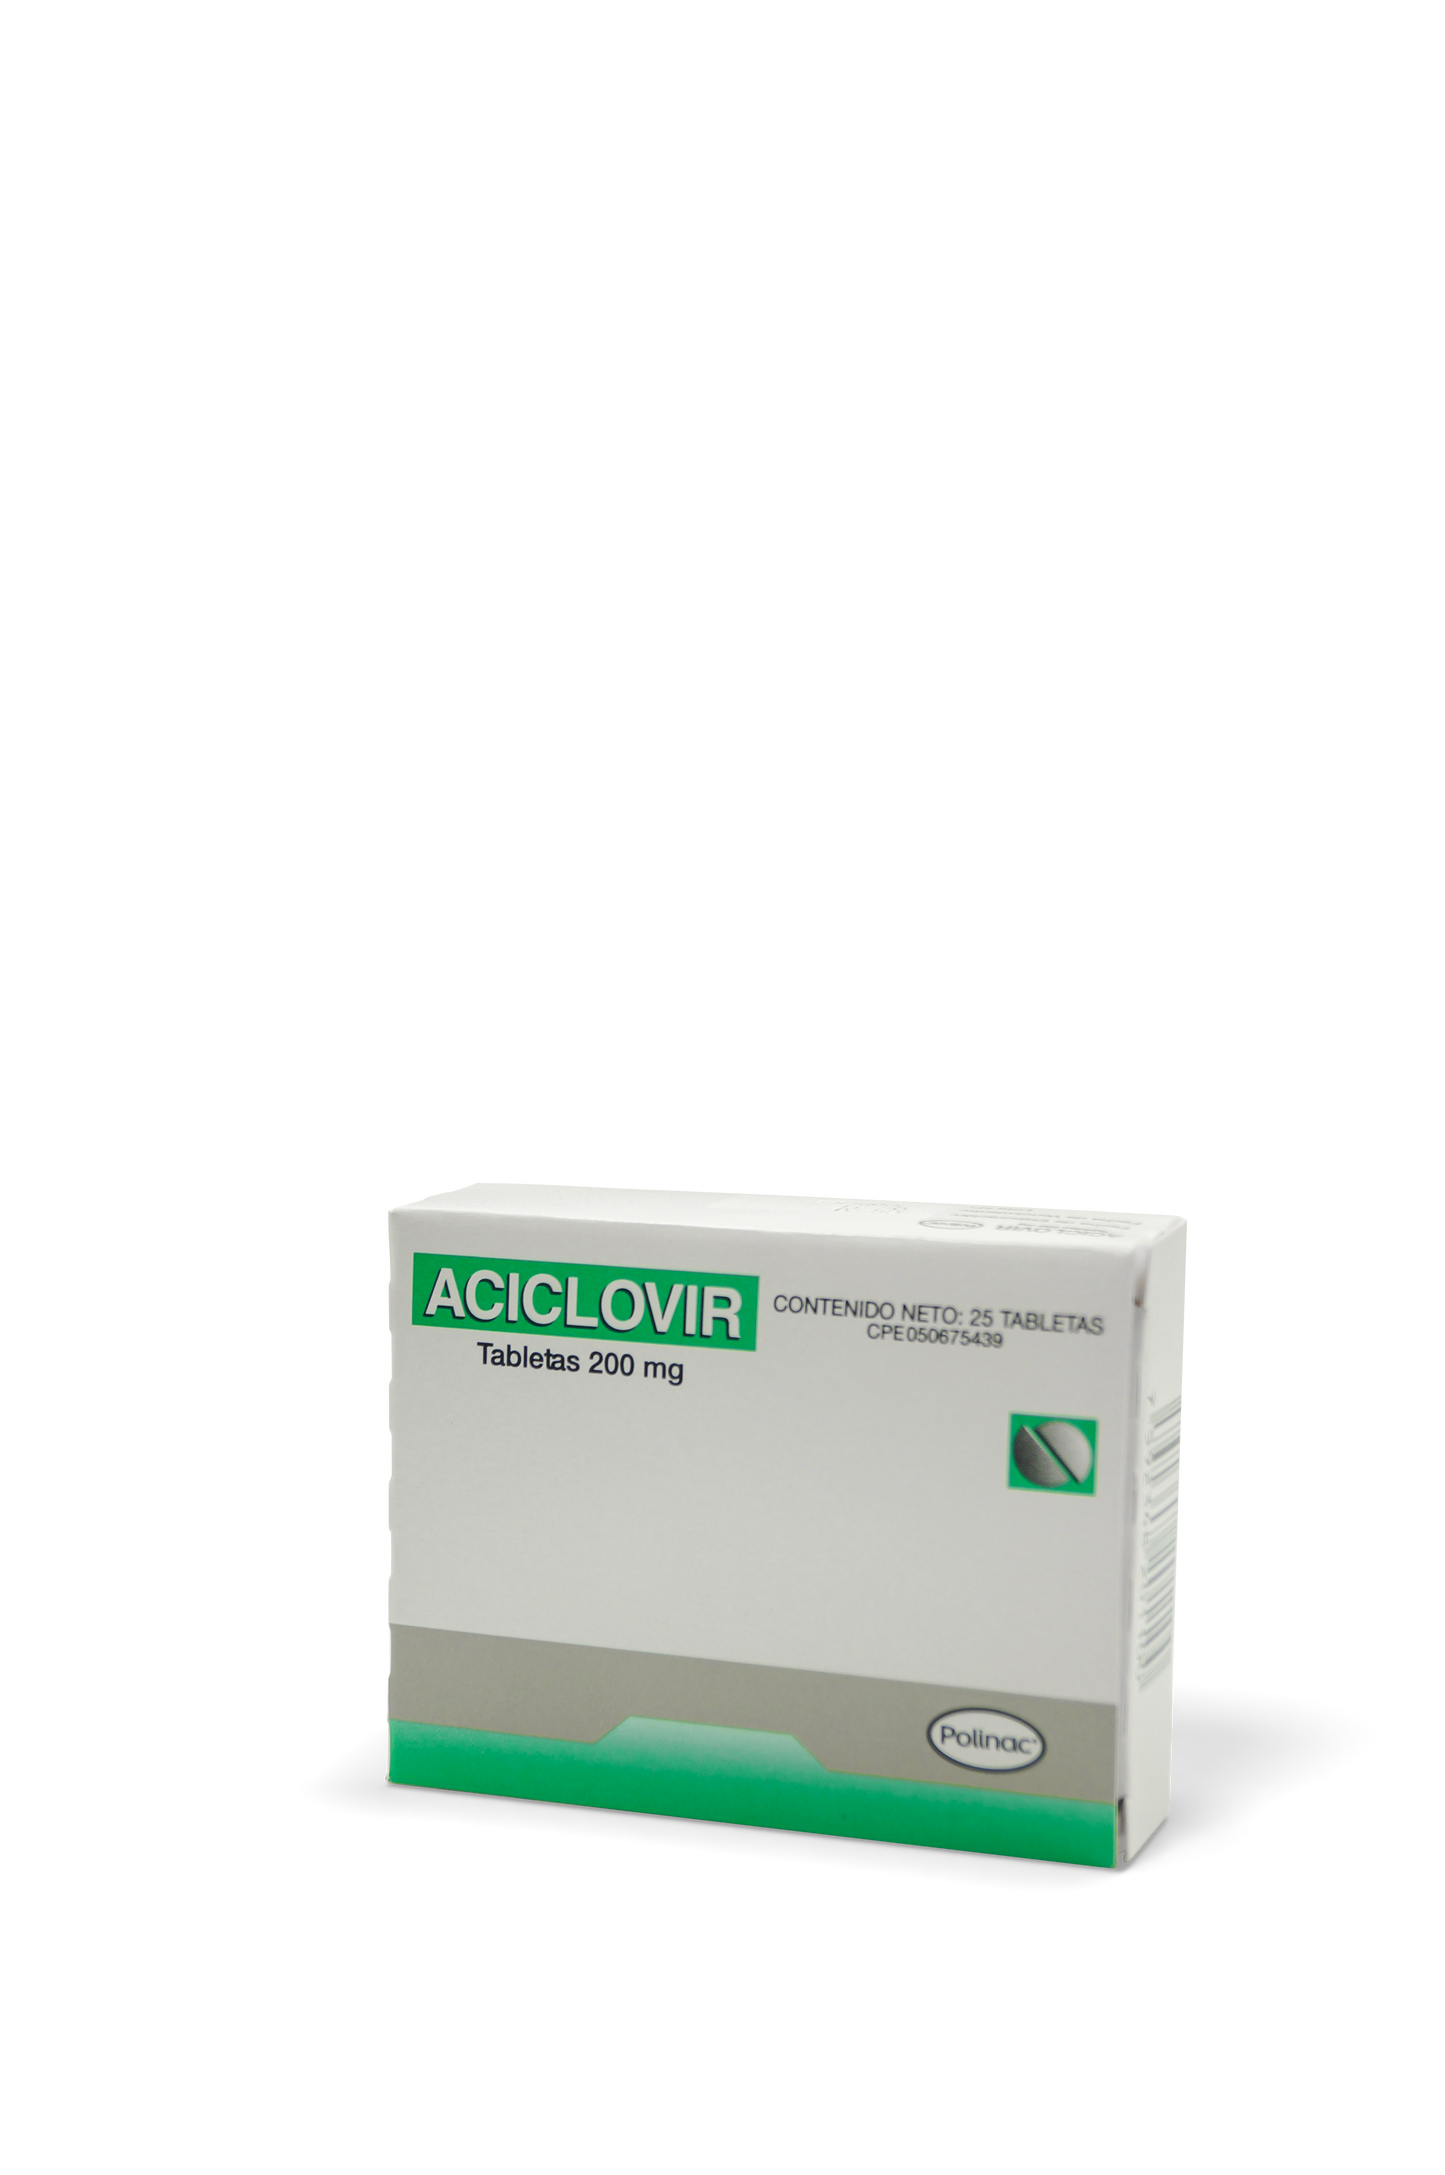 Aciclovir 25 tabletas 200mg